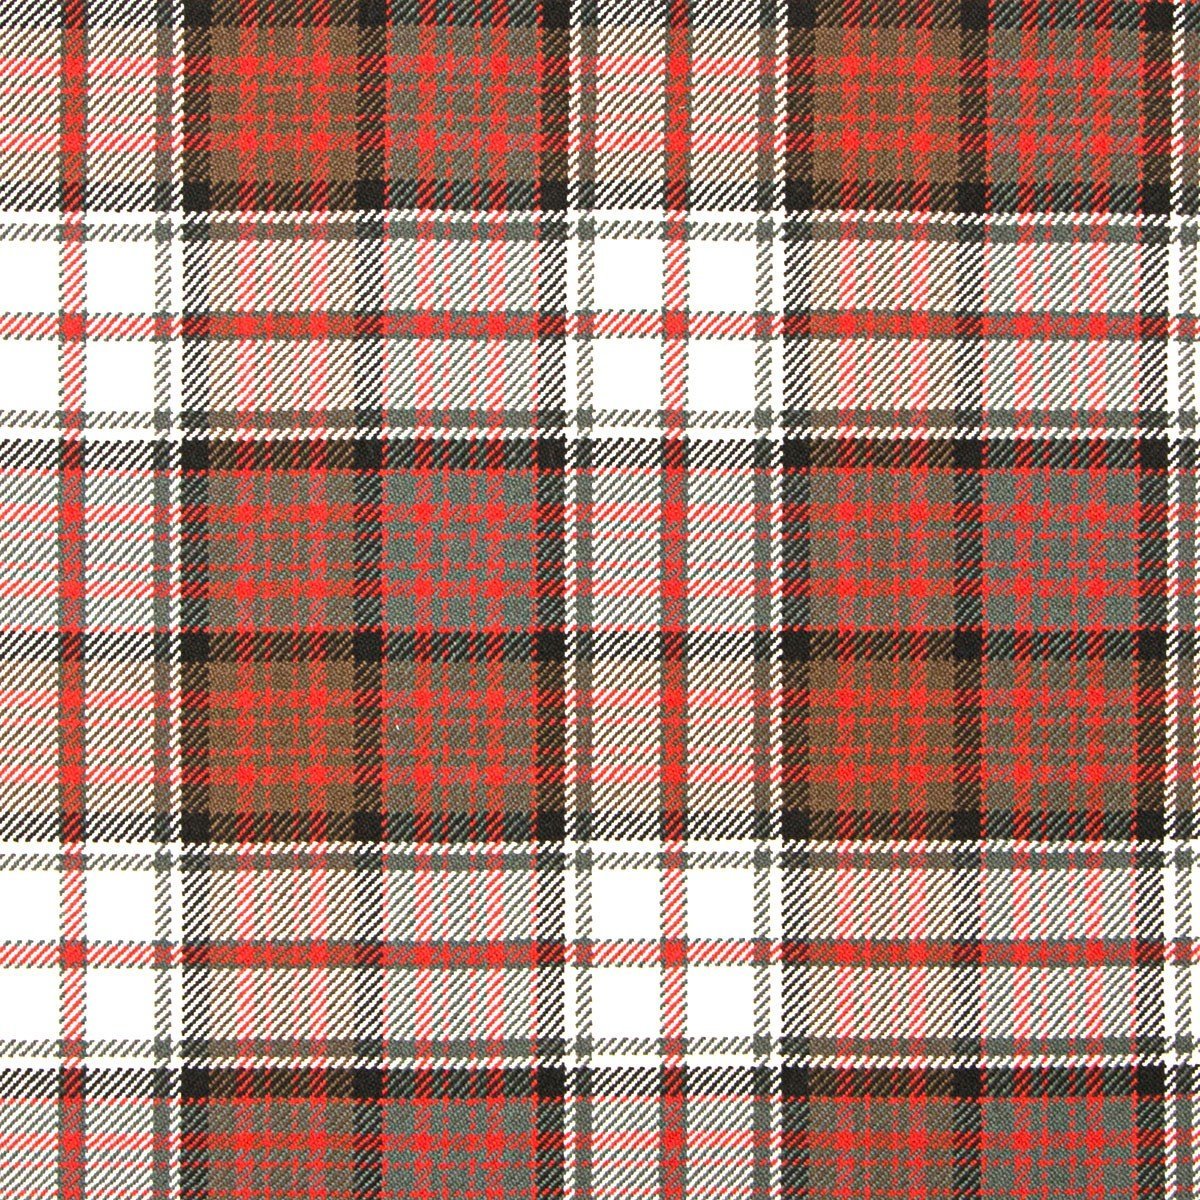 MacDonald Dress Weathered Tartan Heavyweight 16oz - Imperial Highland Supplies